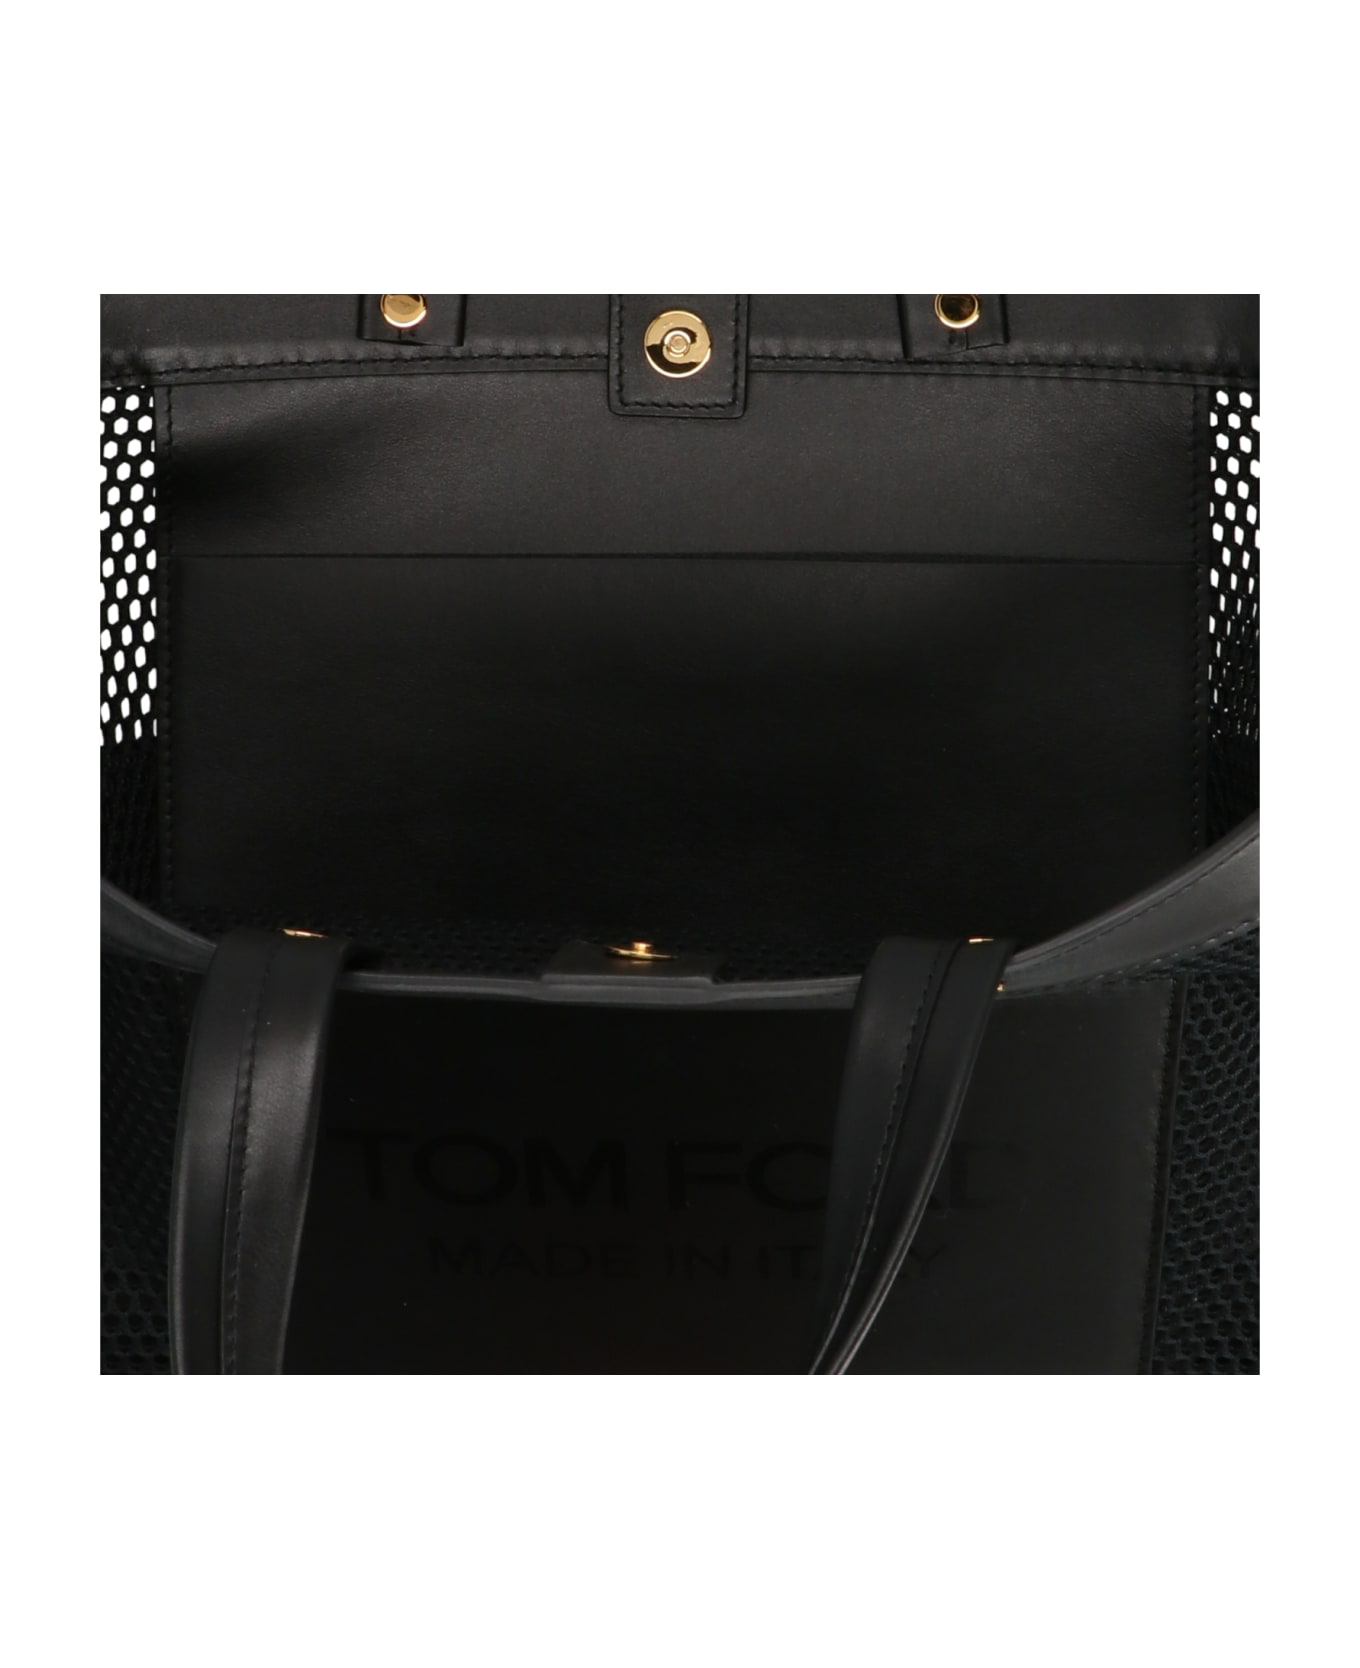 Tom Ford Logo Leather Mesh Shopping Bag - Black  